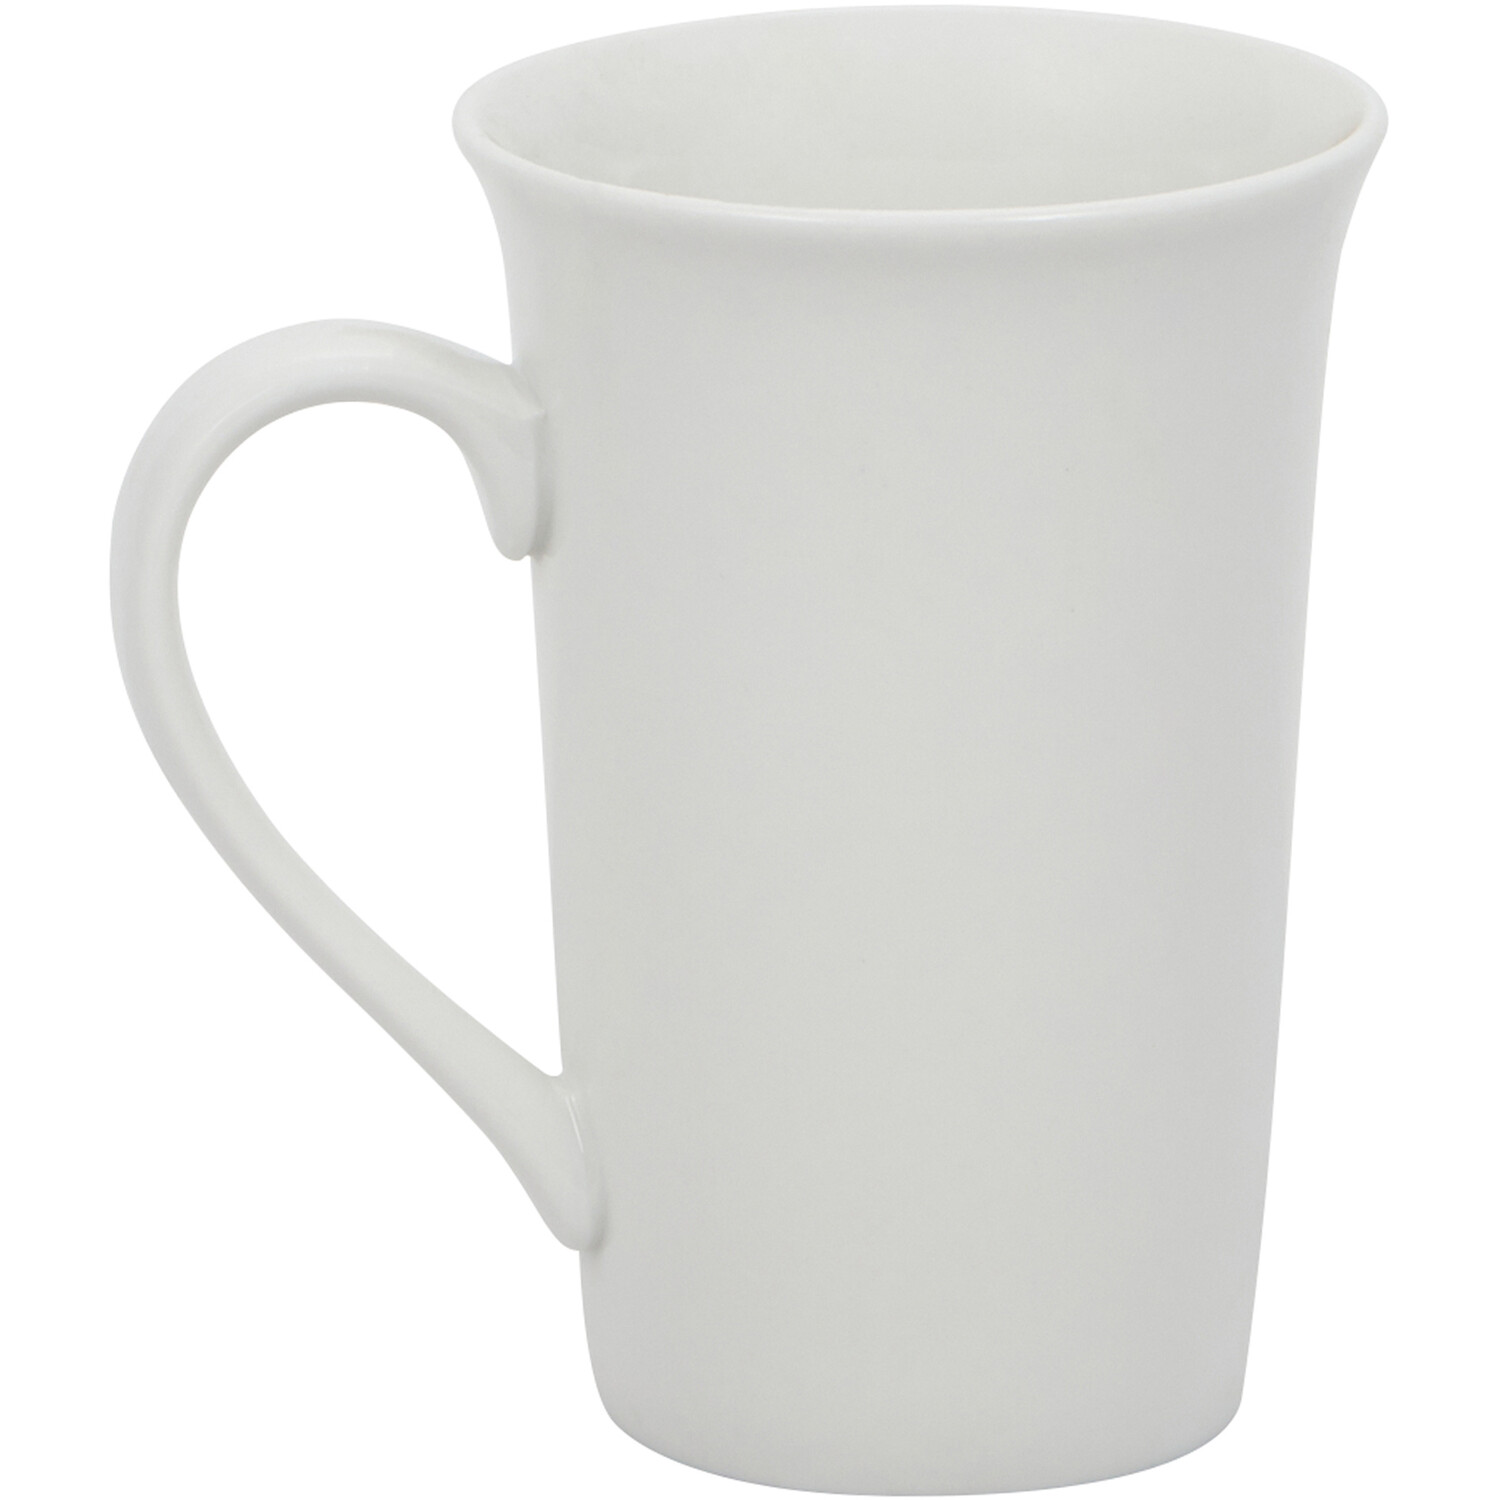 Regency Porcelain Latte Mug - White Image 1